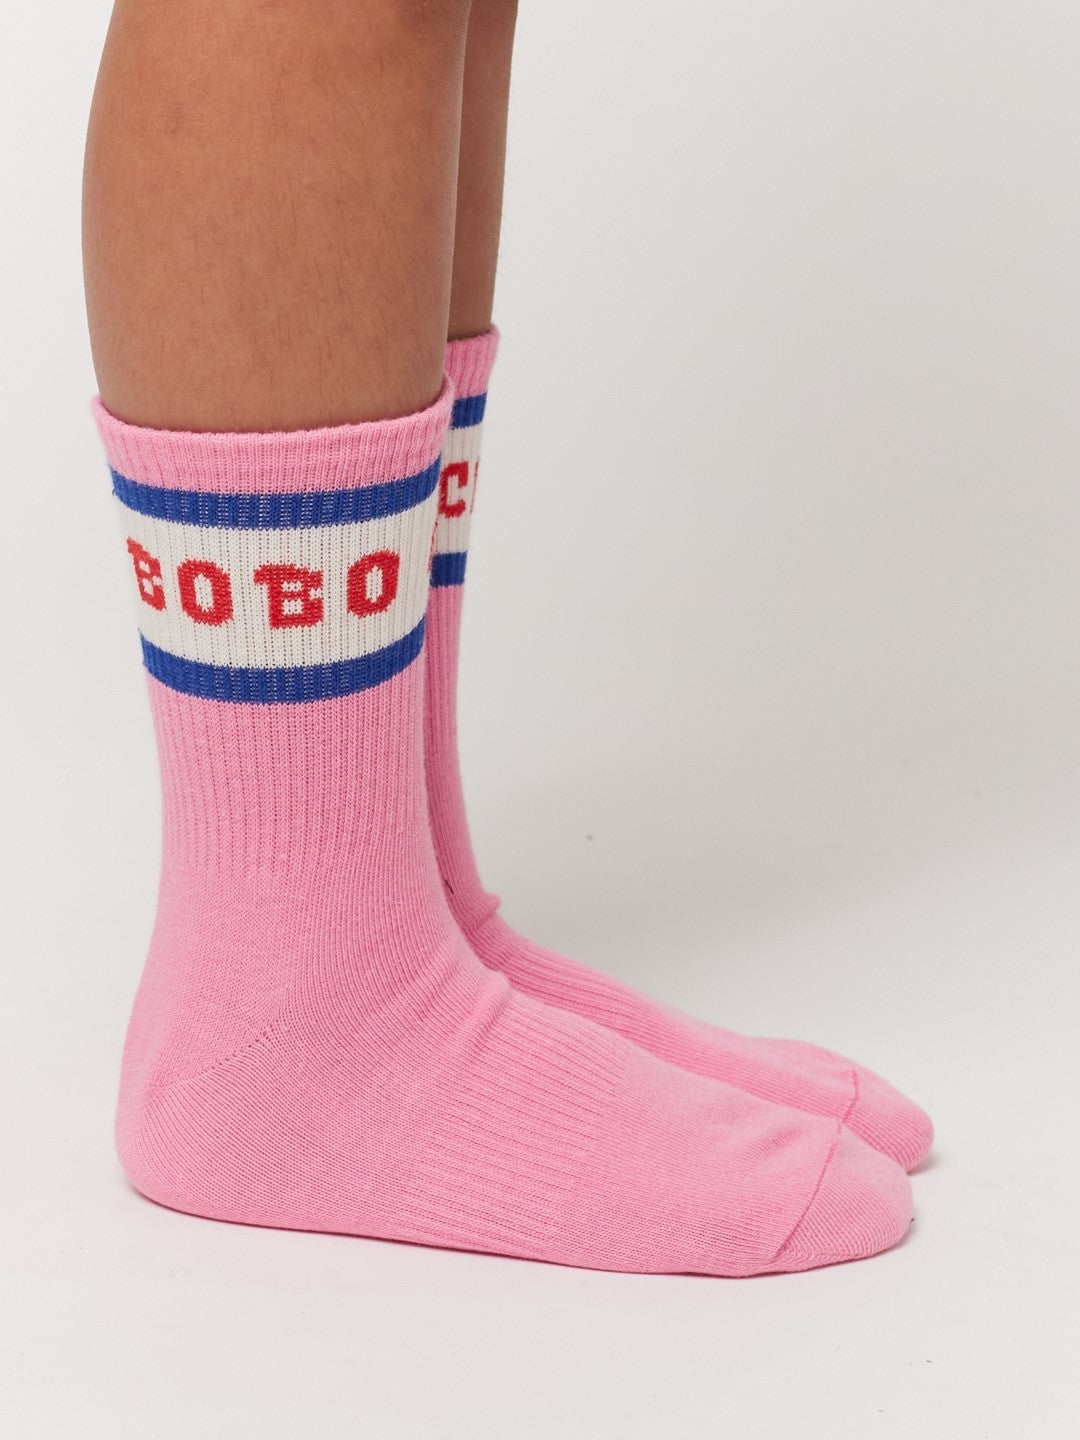 Bobo Choses Short Socks